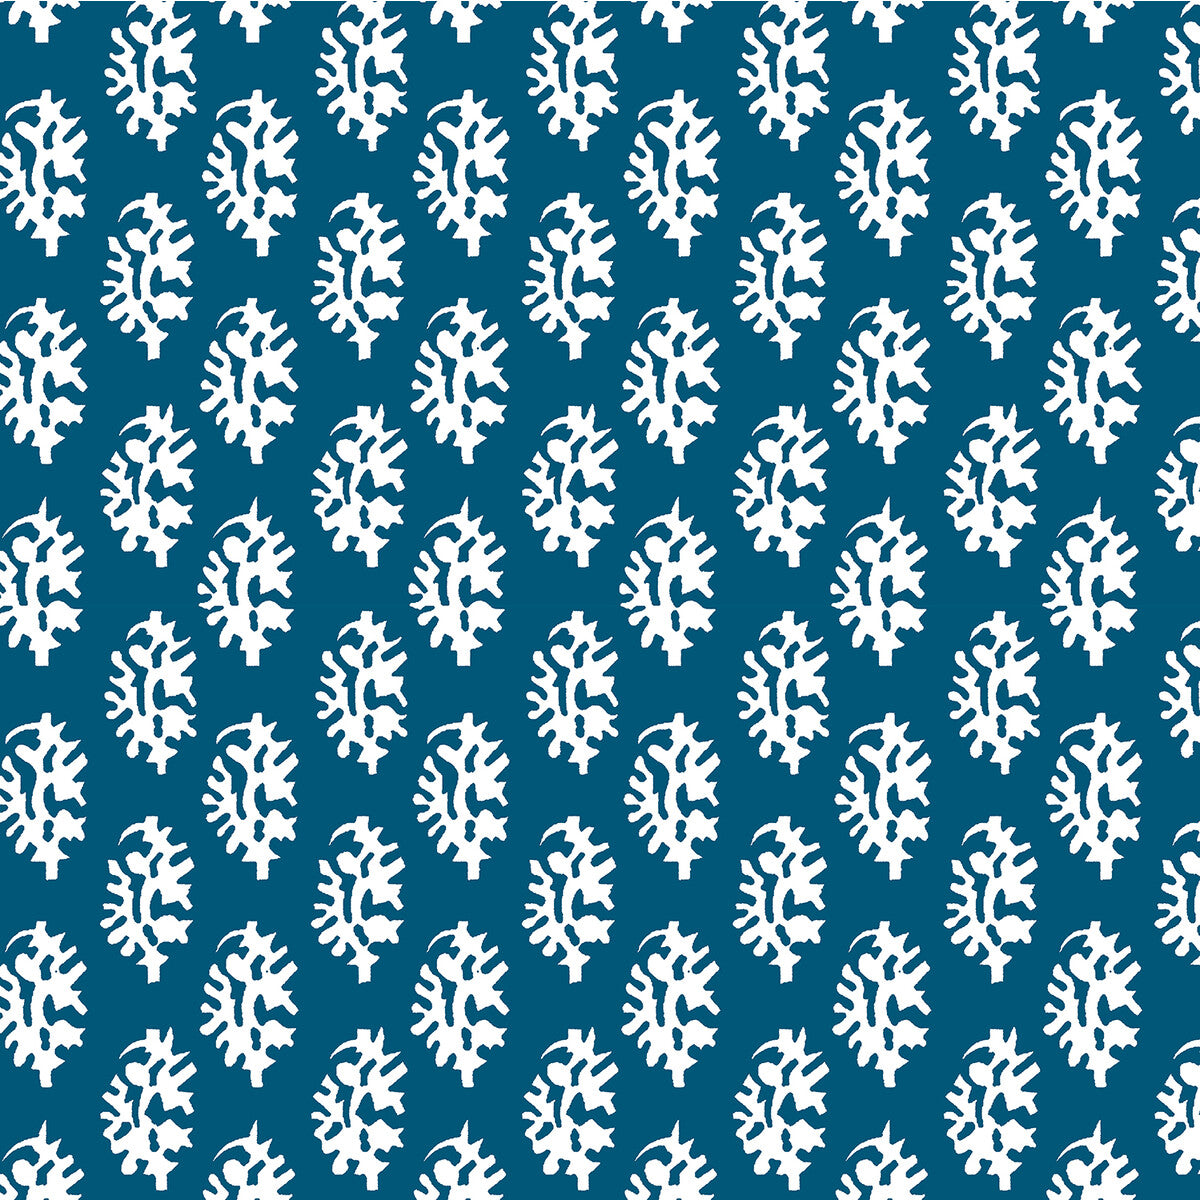 Seijo fabric in azul color - pattern LCT1027.002.0 - by Gaston y Daniela in the Lorenzo Castillo V collection